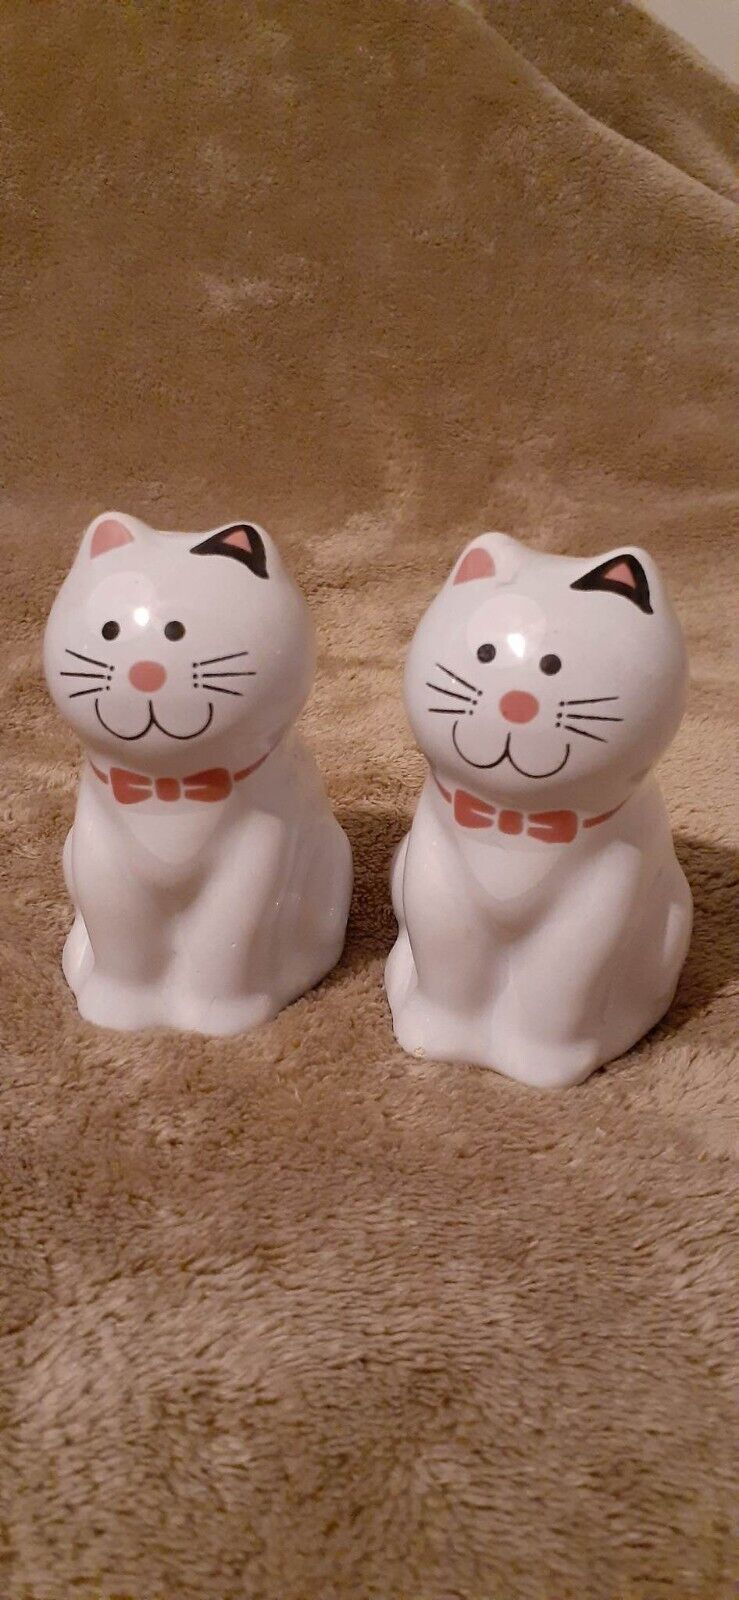 Vintage Adorable Kitty Cat Salt & Pepper Shakers